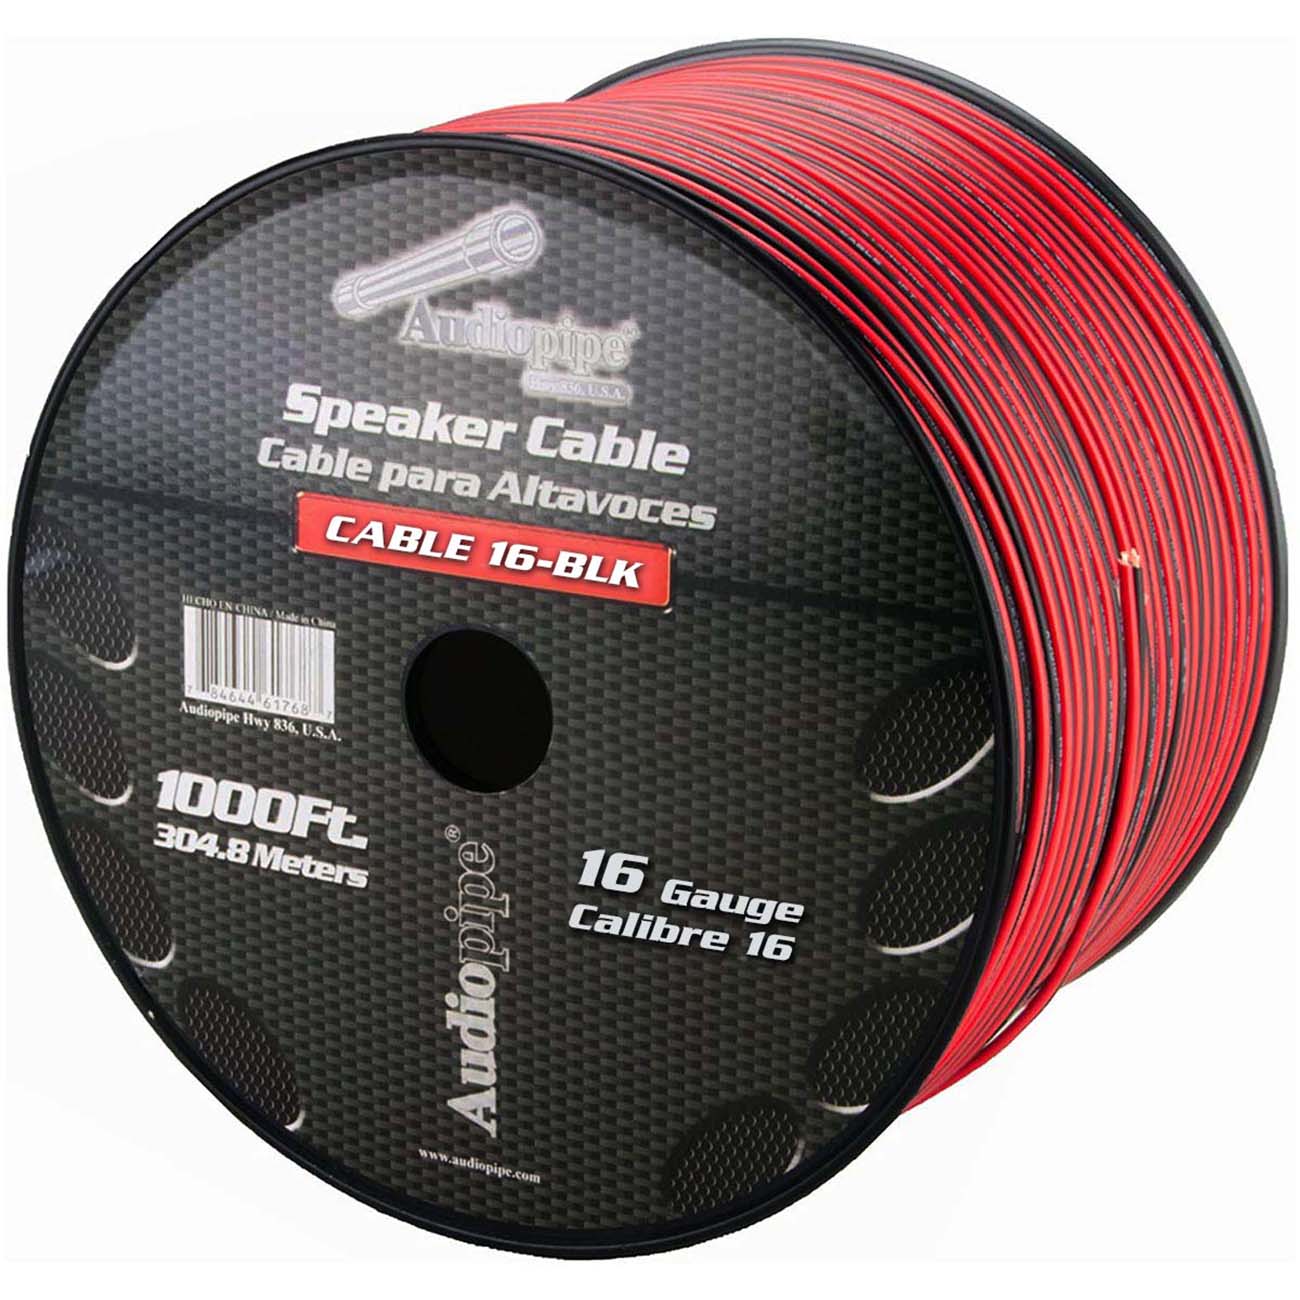 Speaker Cable 16 Ga. 1000' Audiopipe; Red + Black